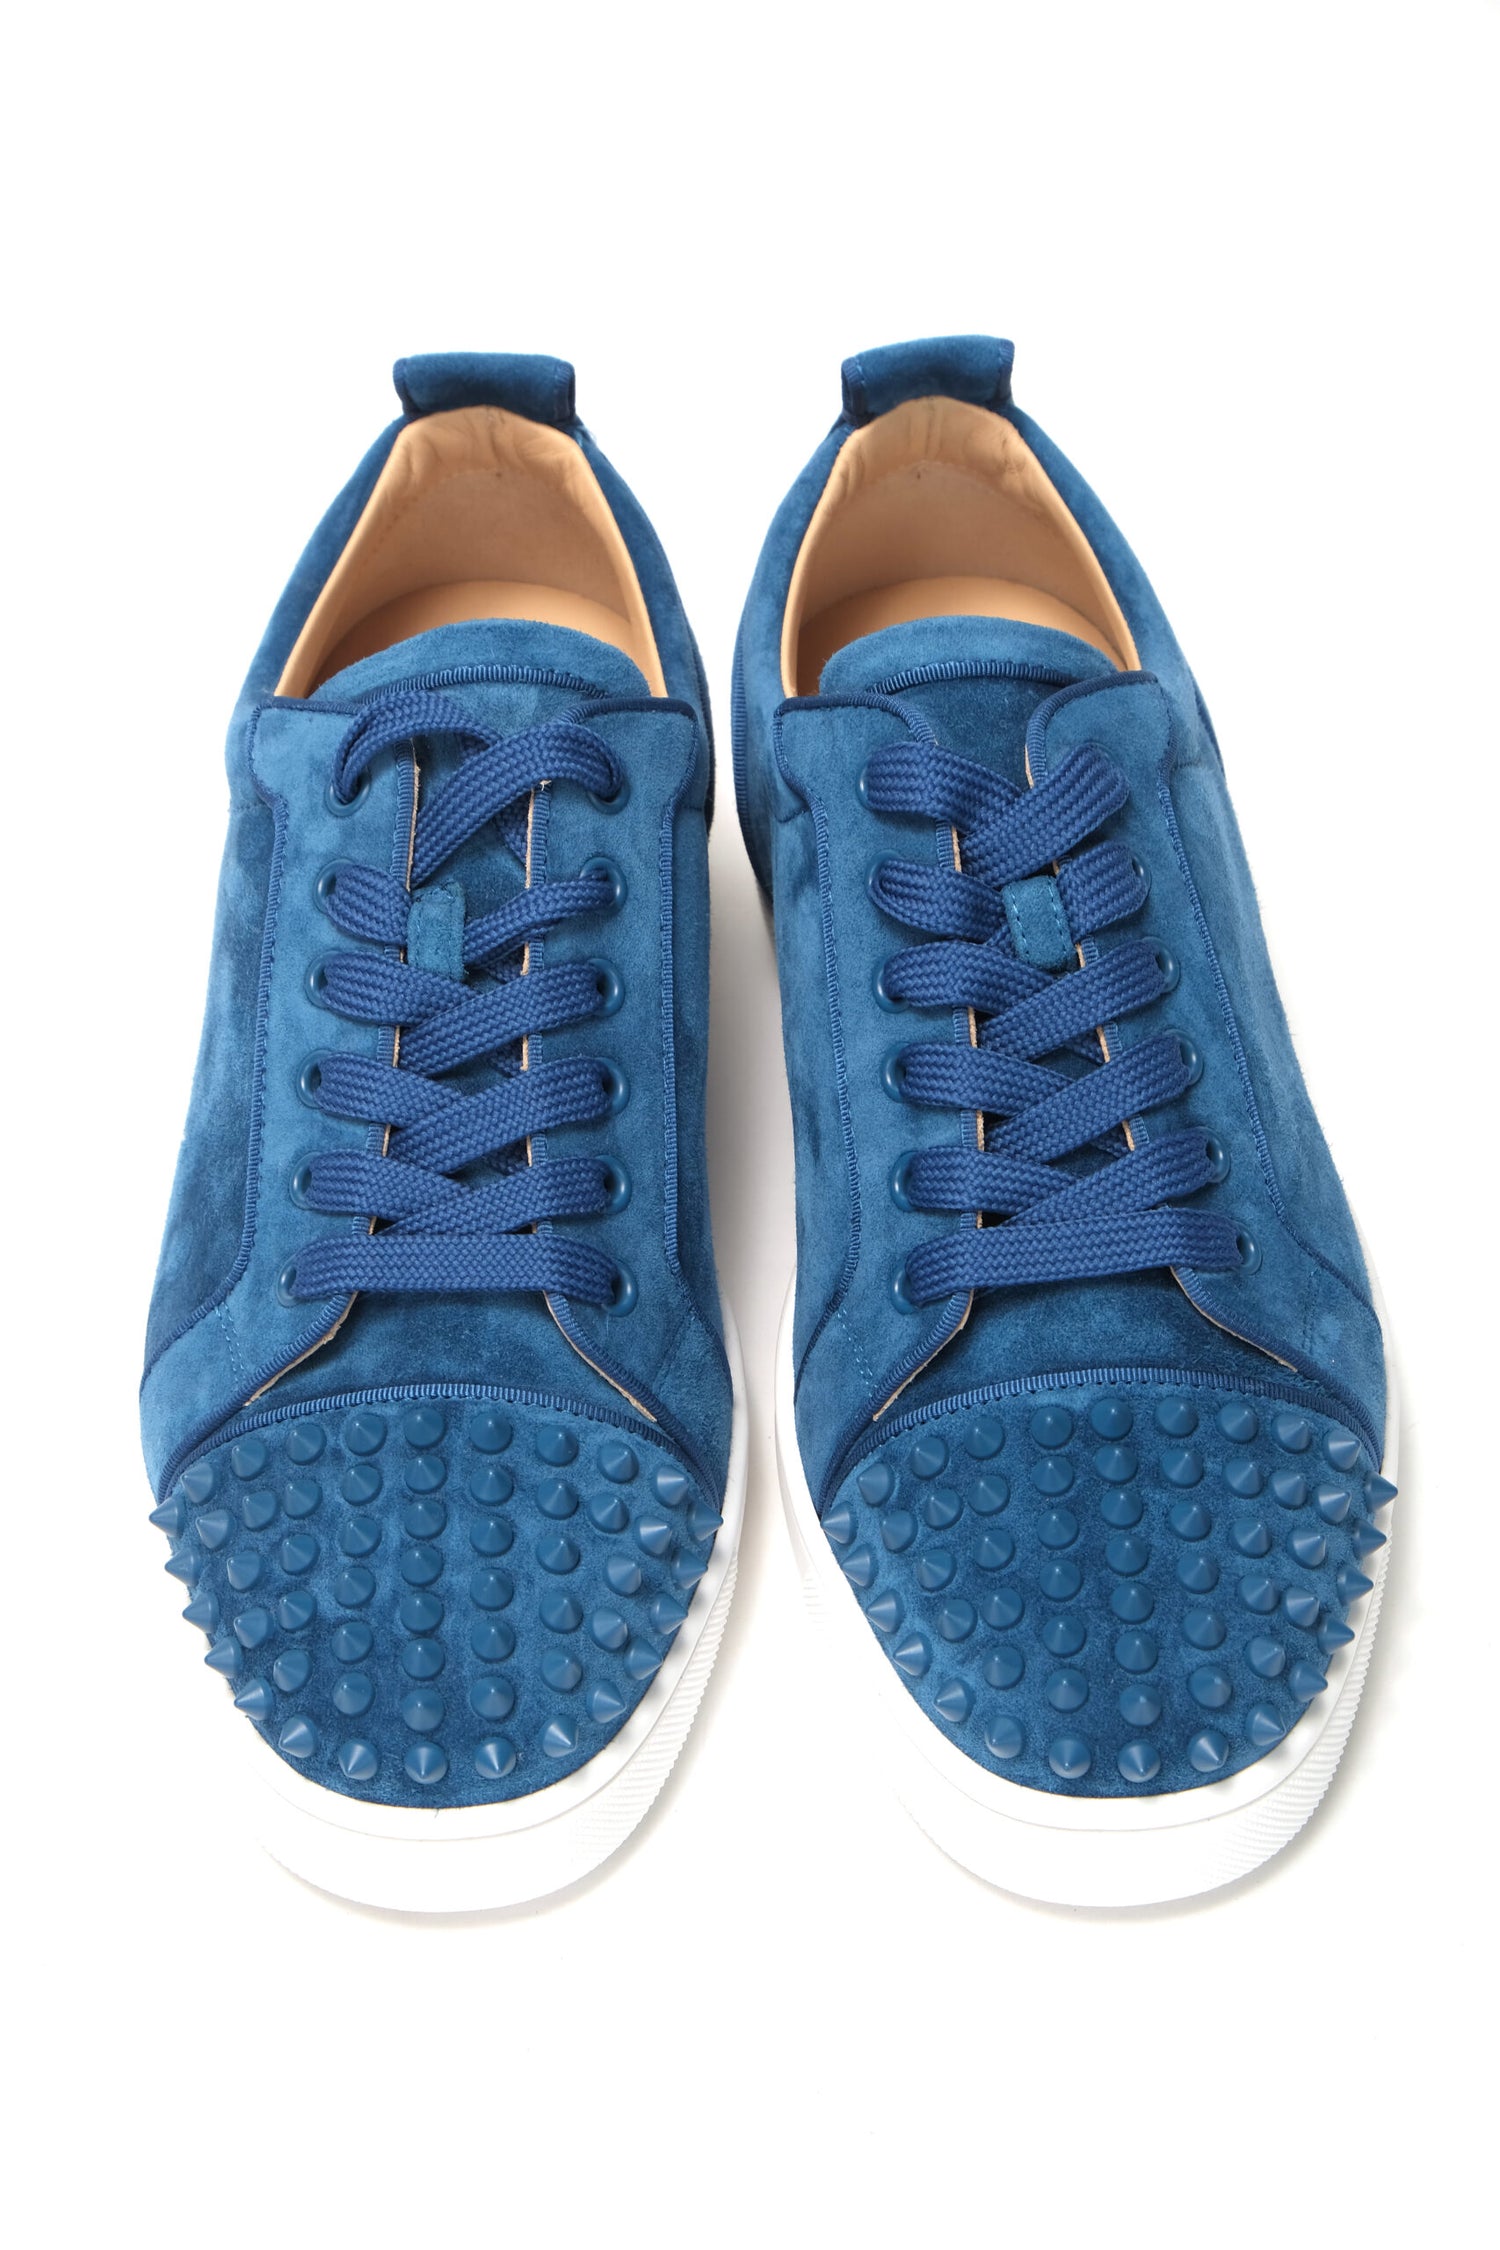 Christian Louboutin Multi/White Mat Version Louis Junior Spikes Shoes | aumi4